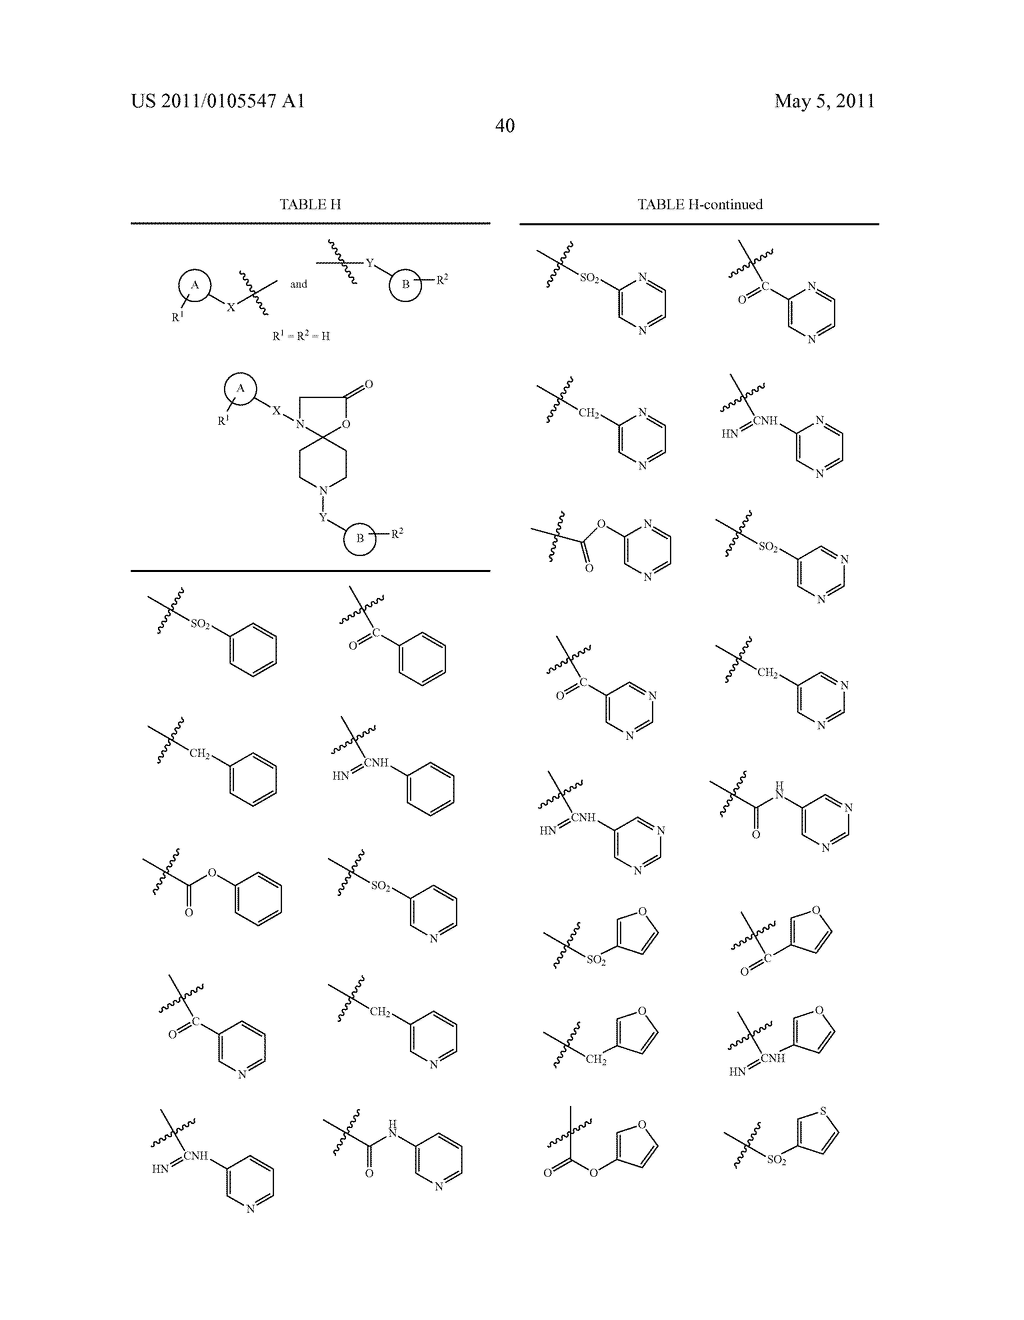 FILAMIN A-BINDING ANTI-INFLAMMATORY ANALGESIC - diagram, schematic, and image 41